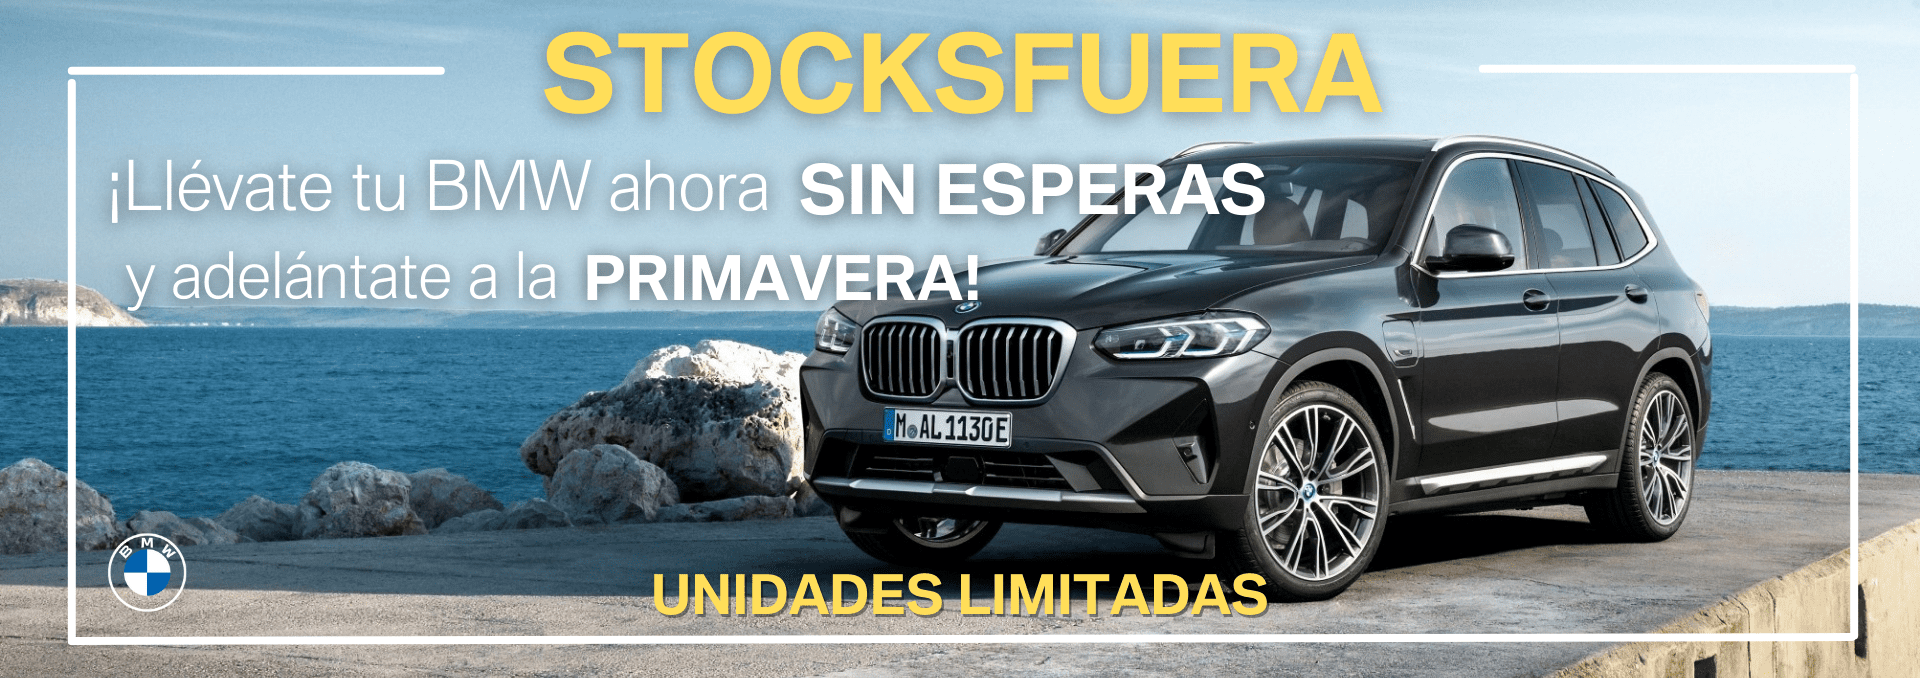 BMW stock limitado